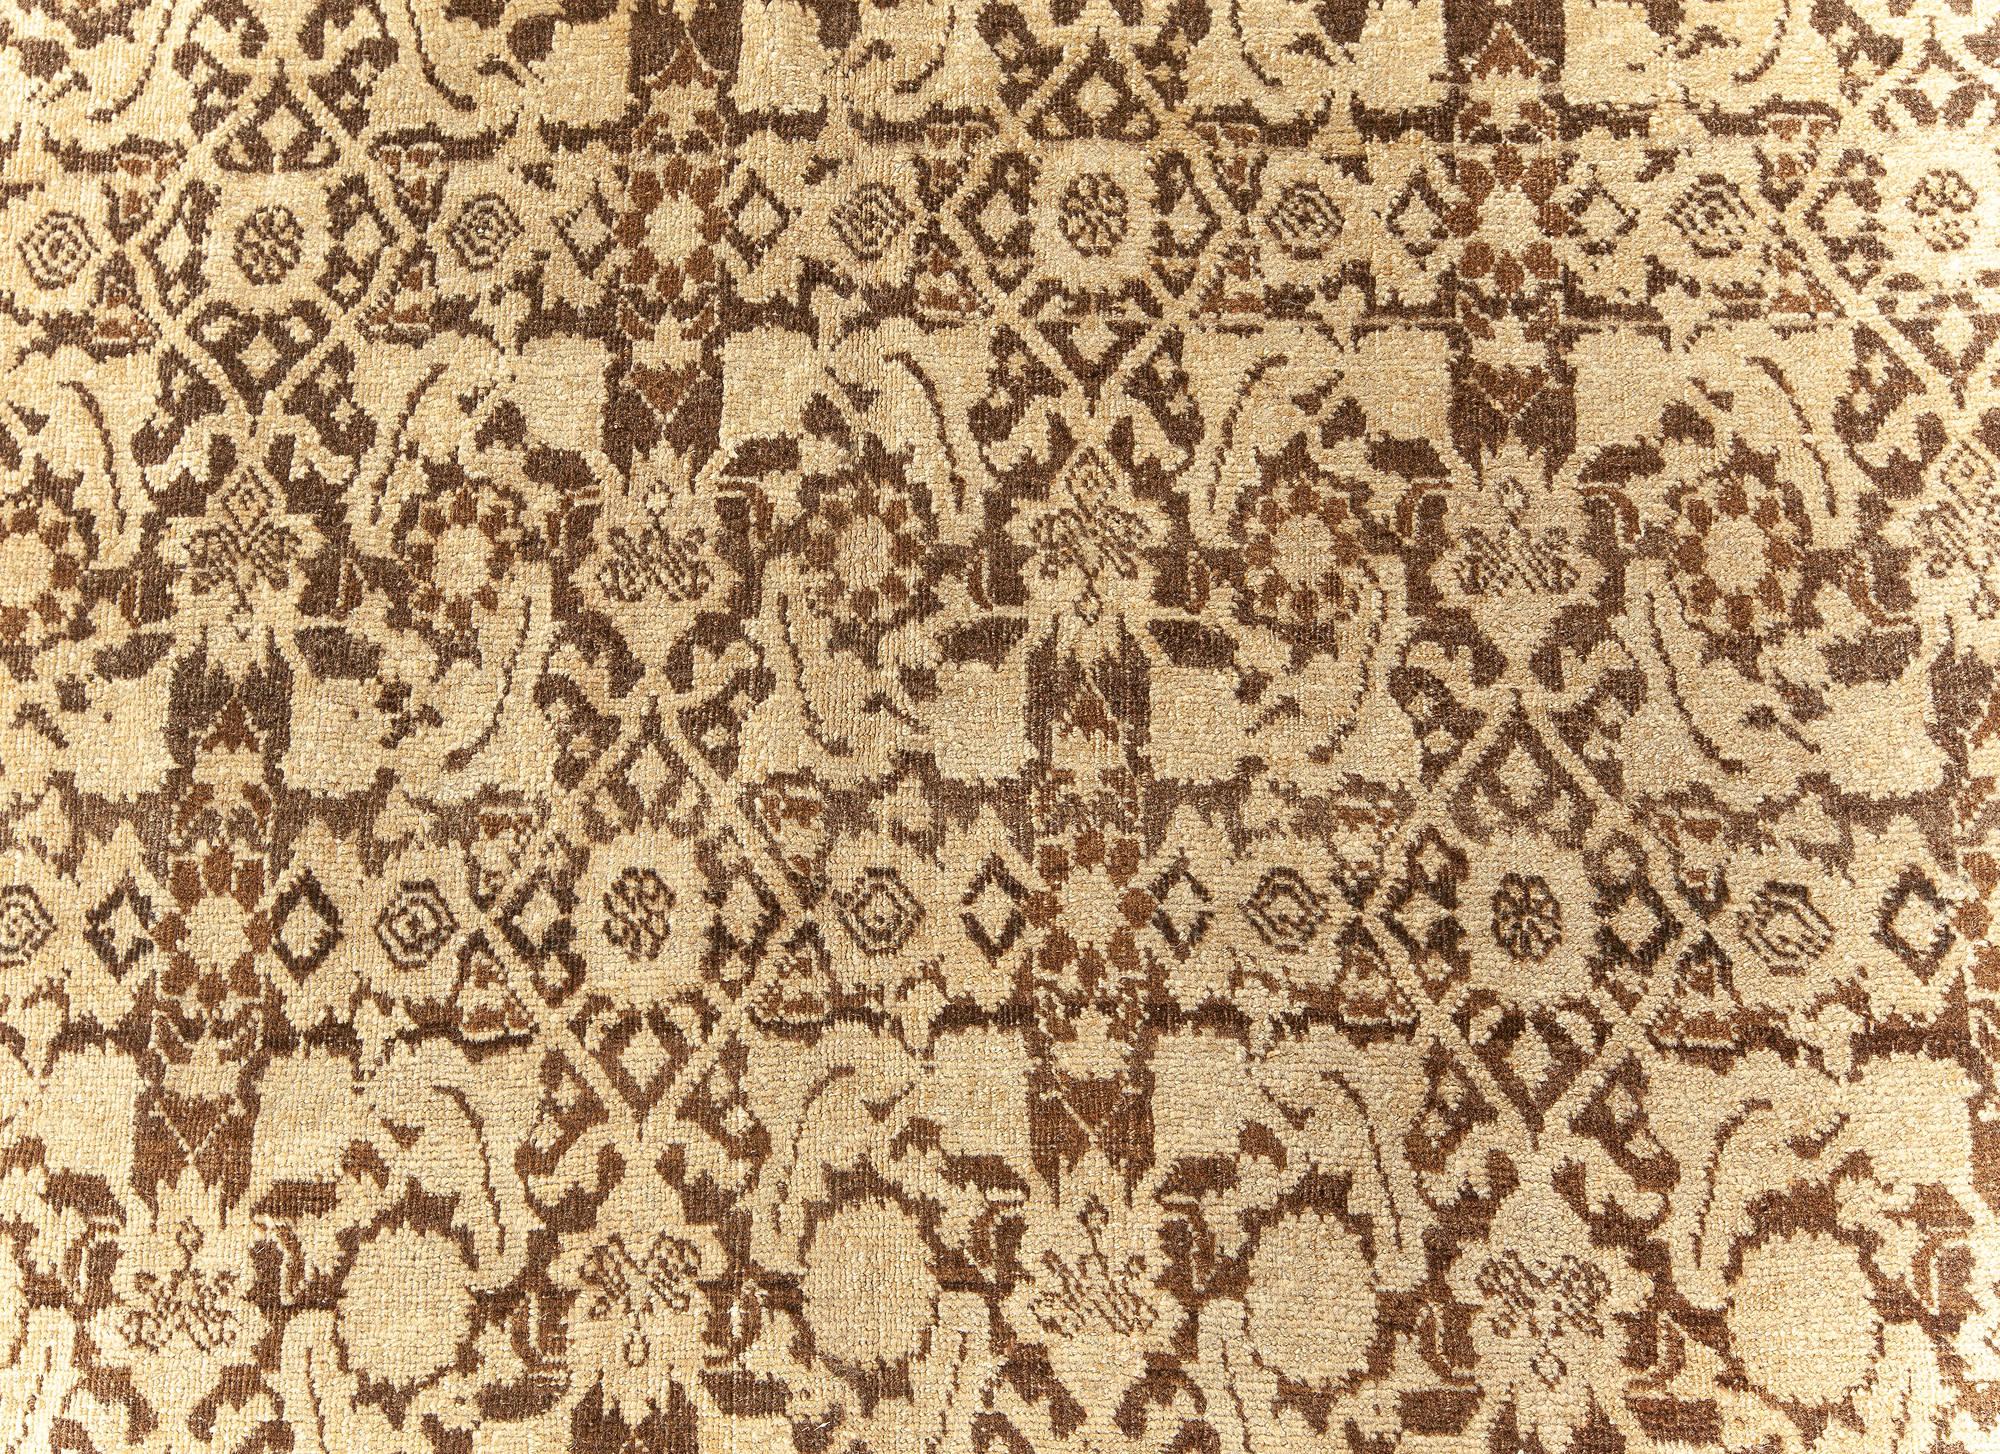 Antique Persian Tabriz Beige Brown Handwoven Wool Rug
Size: 11'4